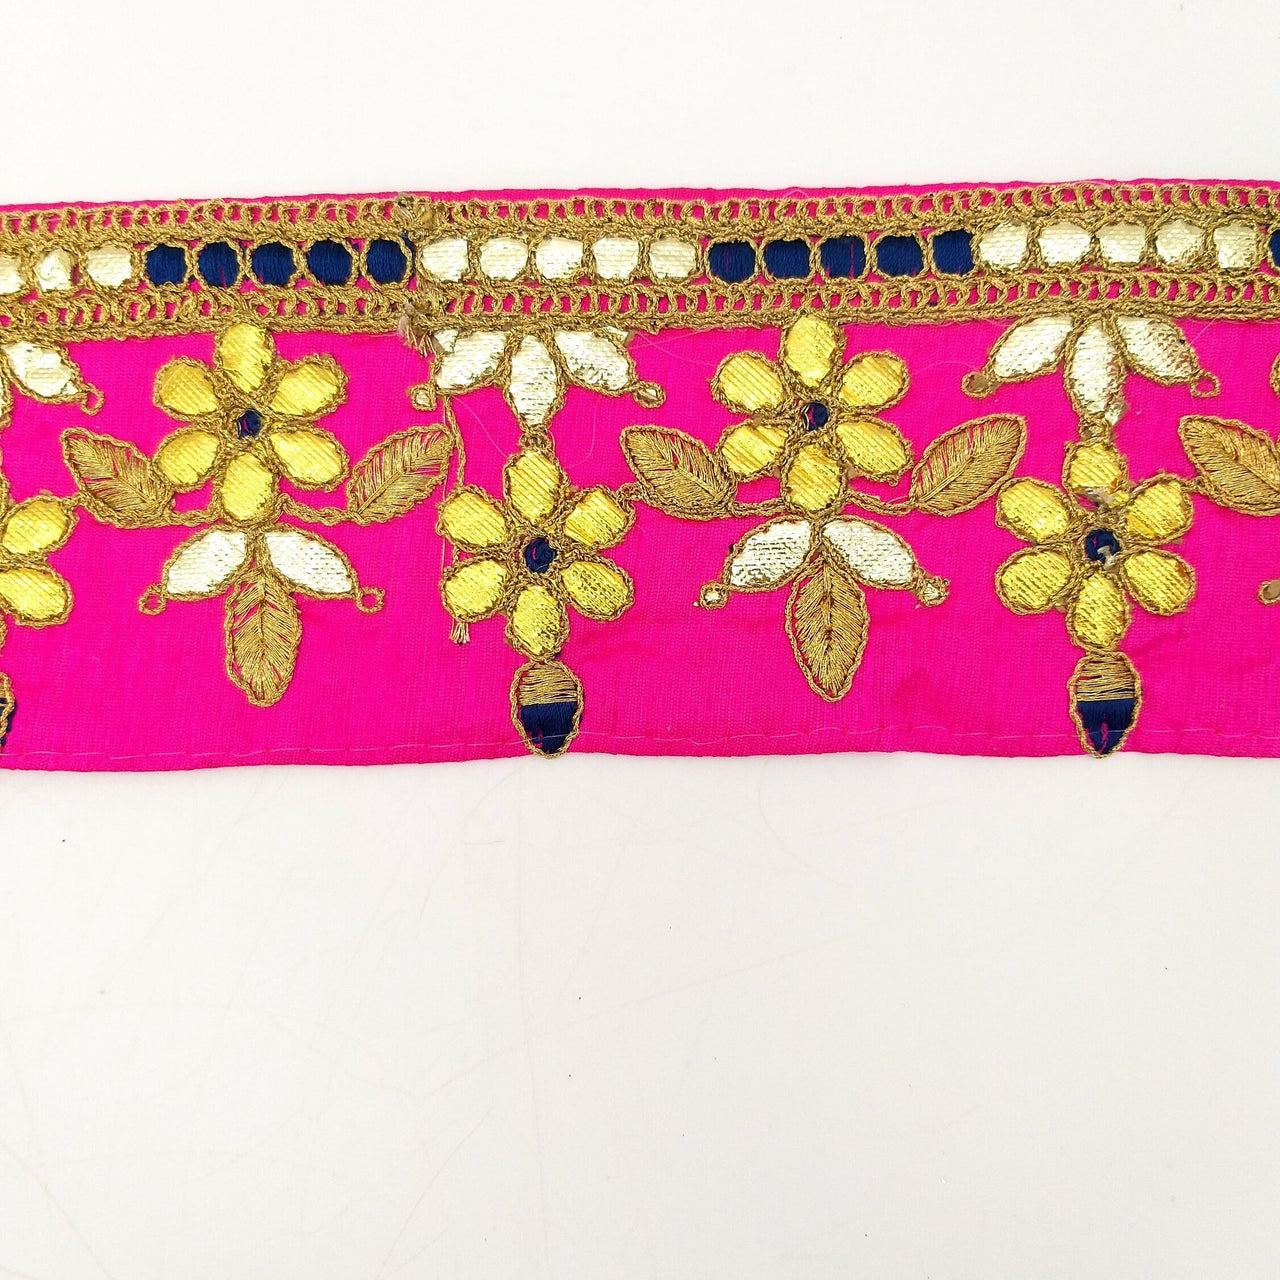 Fuchsia Pink Art Silk Fabric Trim, Blue & Gold Floral Embroidery Gota Patti Indian Sari Border Trim By Yard Decorative Trim Craft Lace